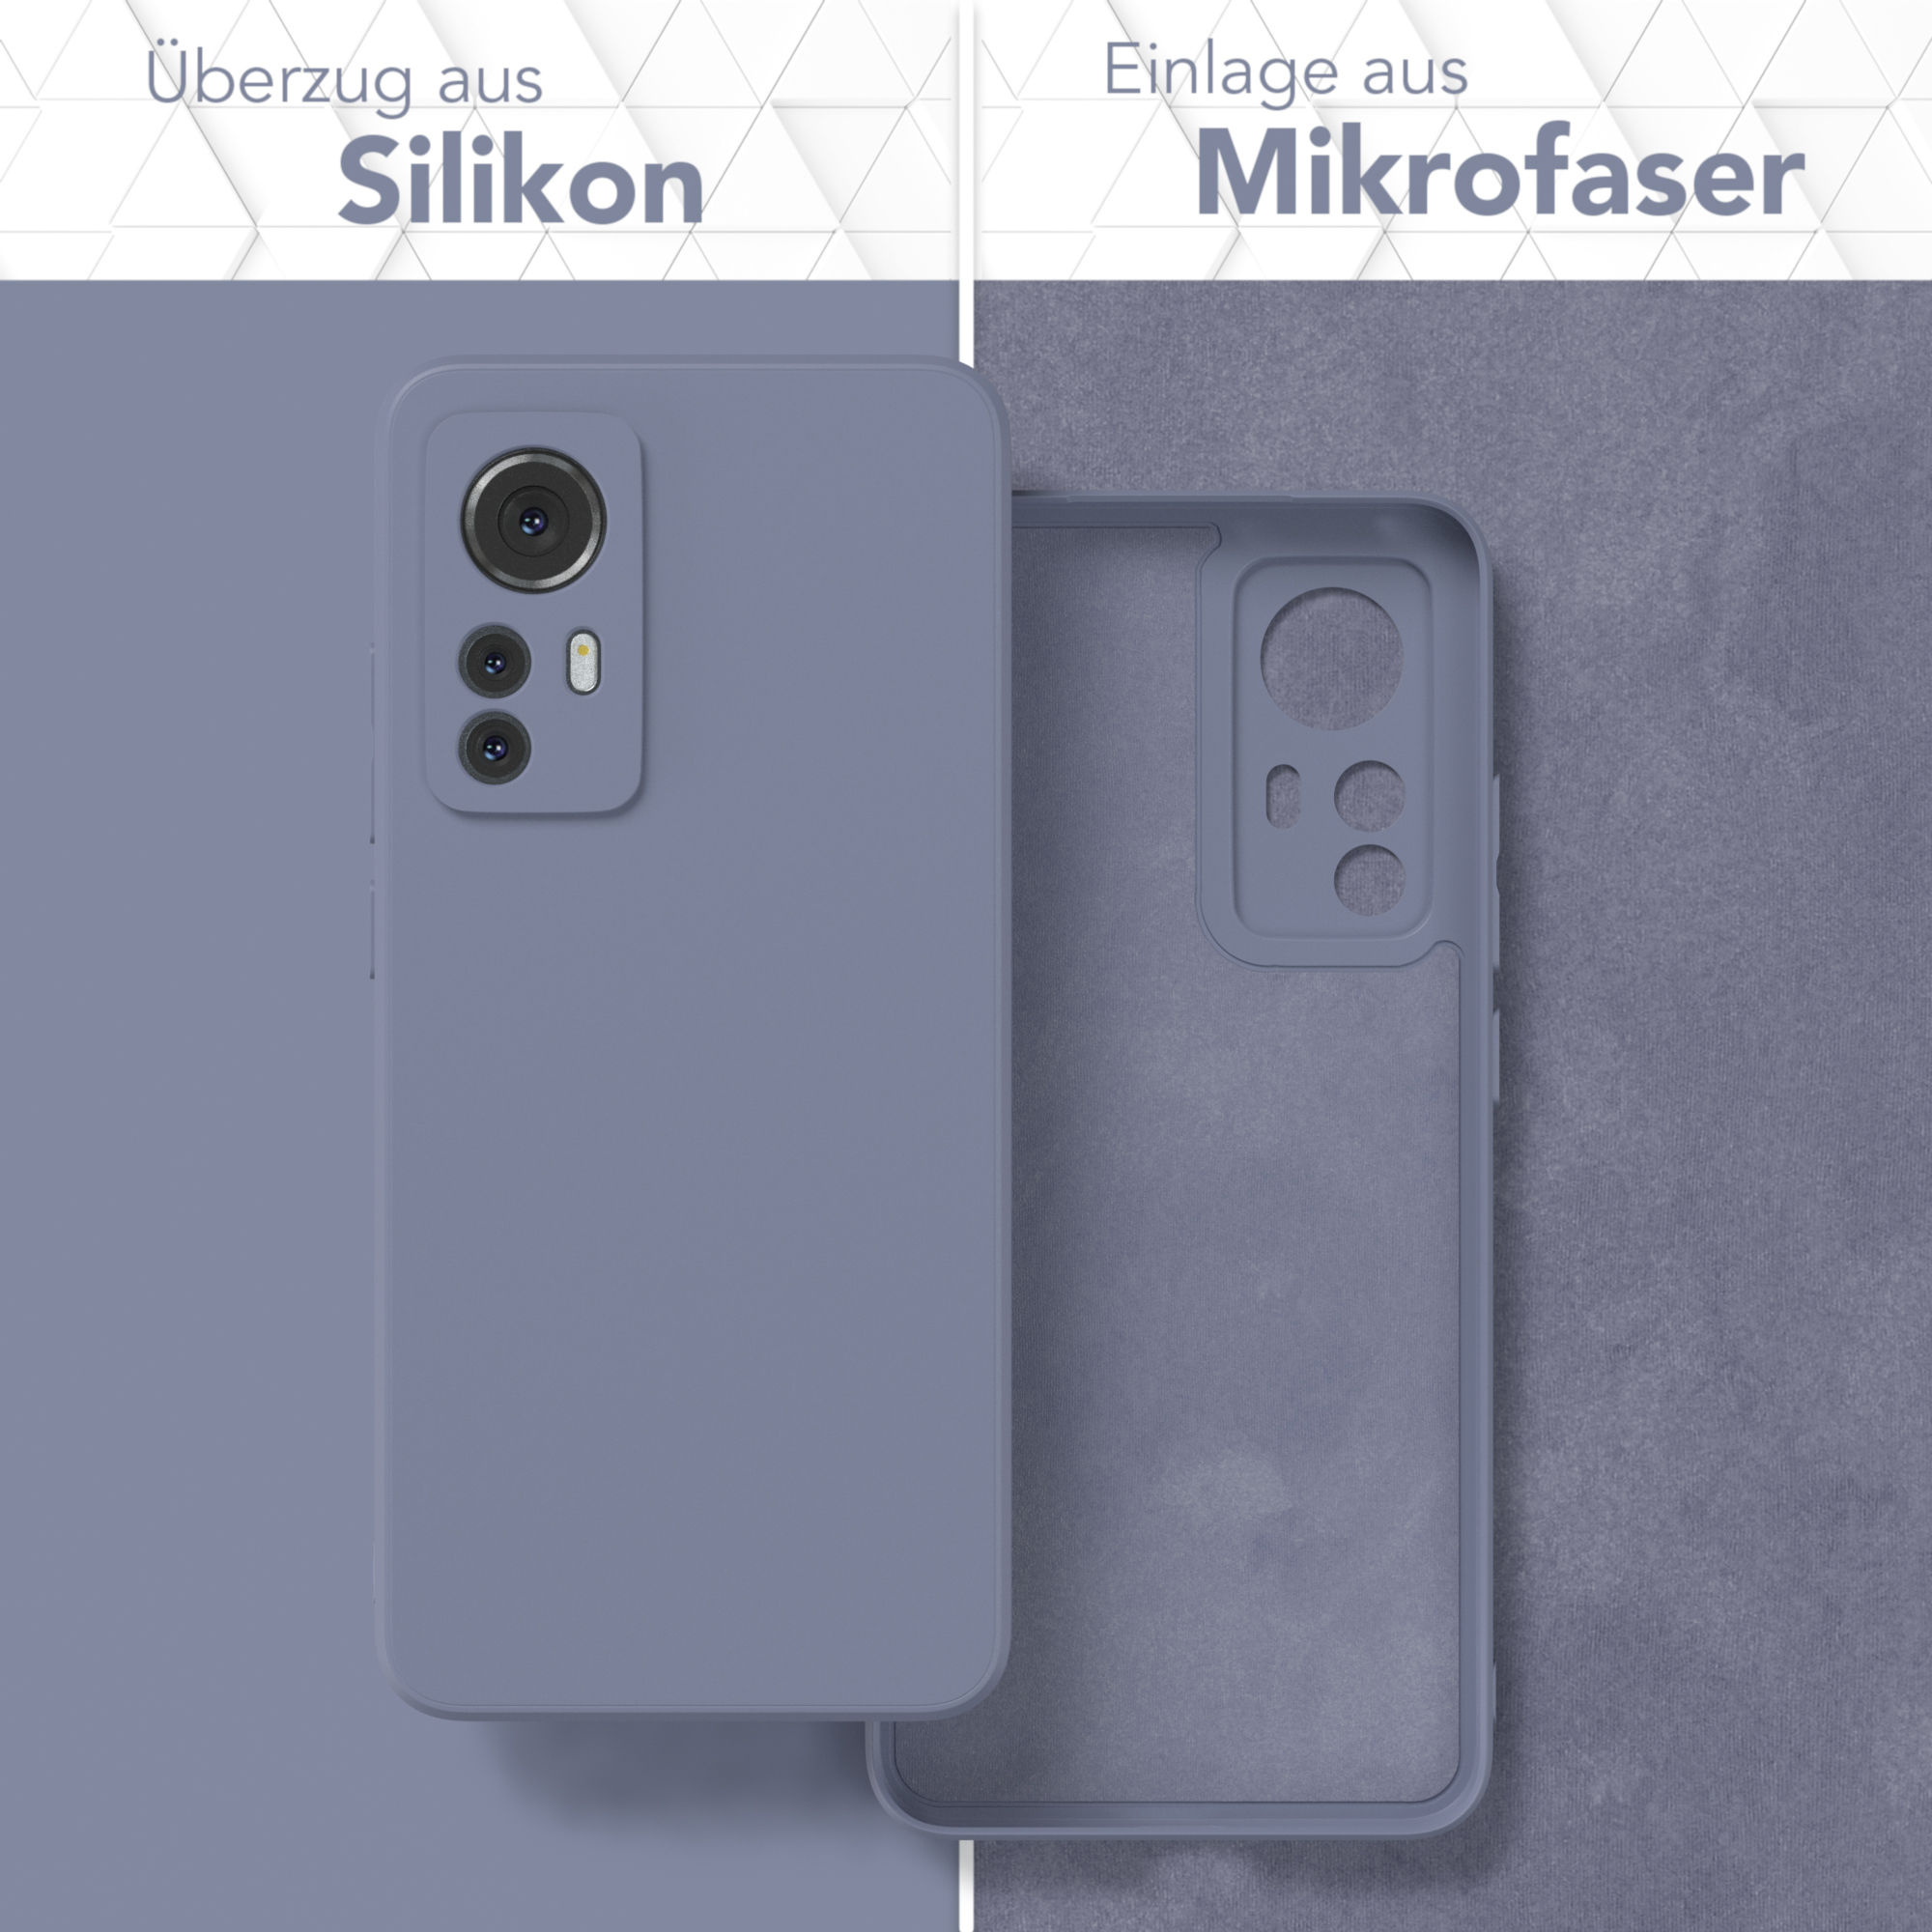 EAZY CASE TPU Silikon Xiaomi, 12X, Blau Handycase 12 Eis Matt, / Backcover